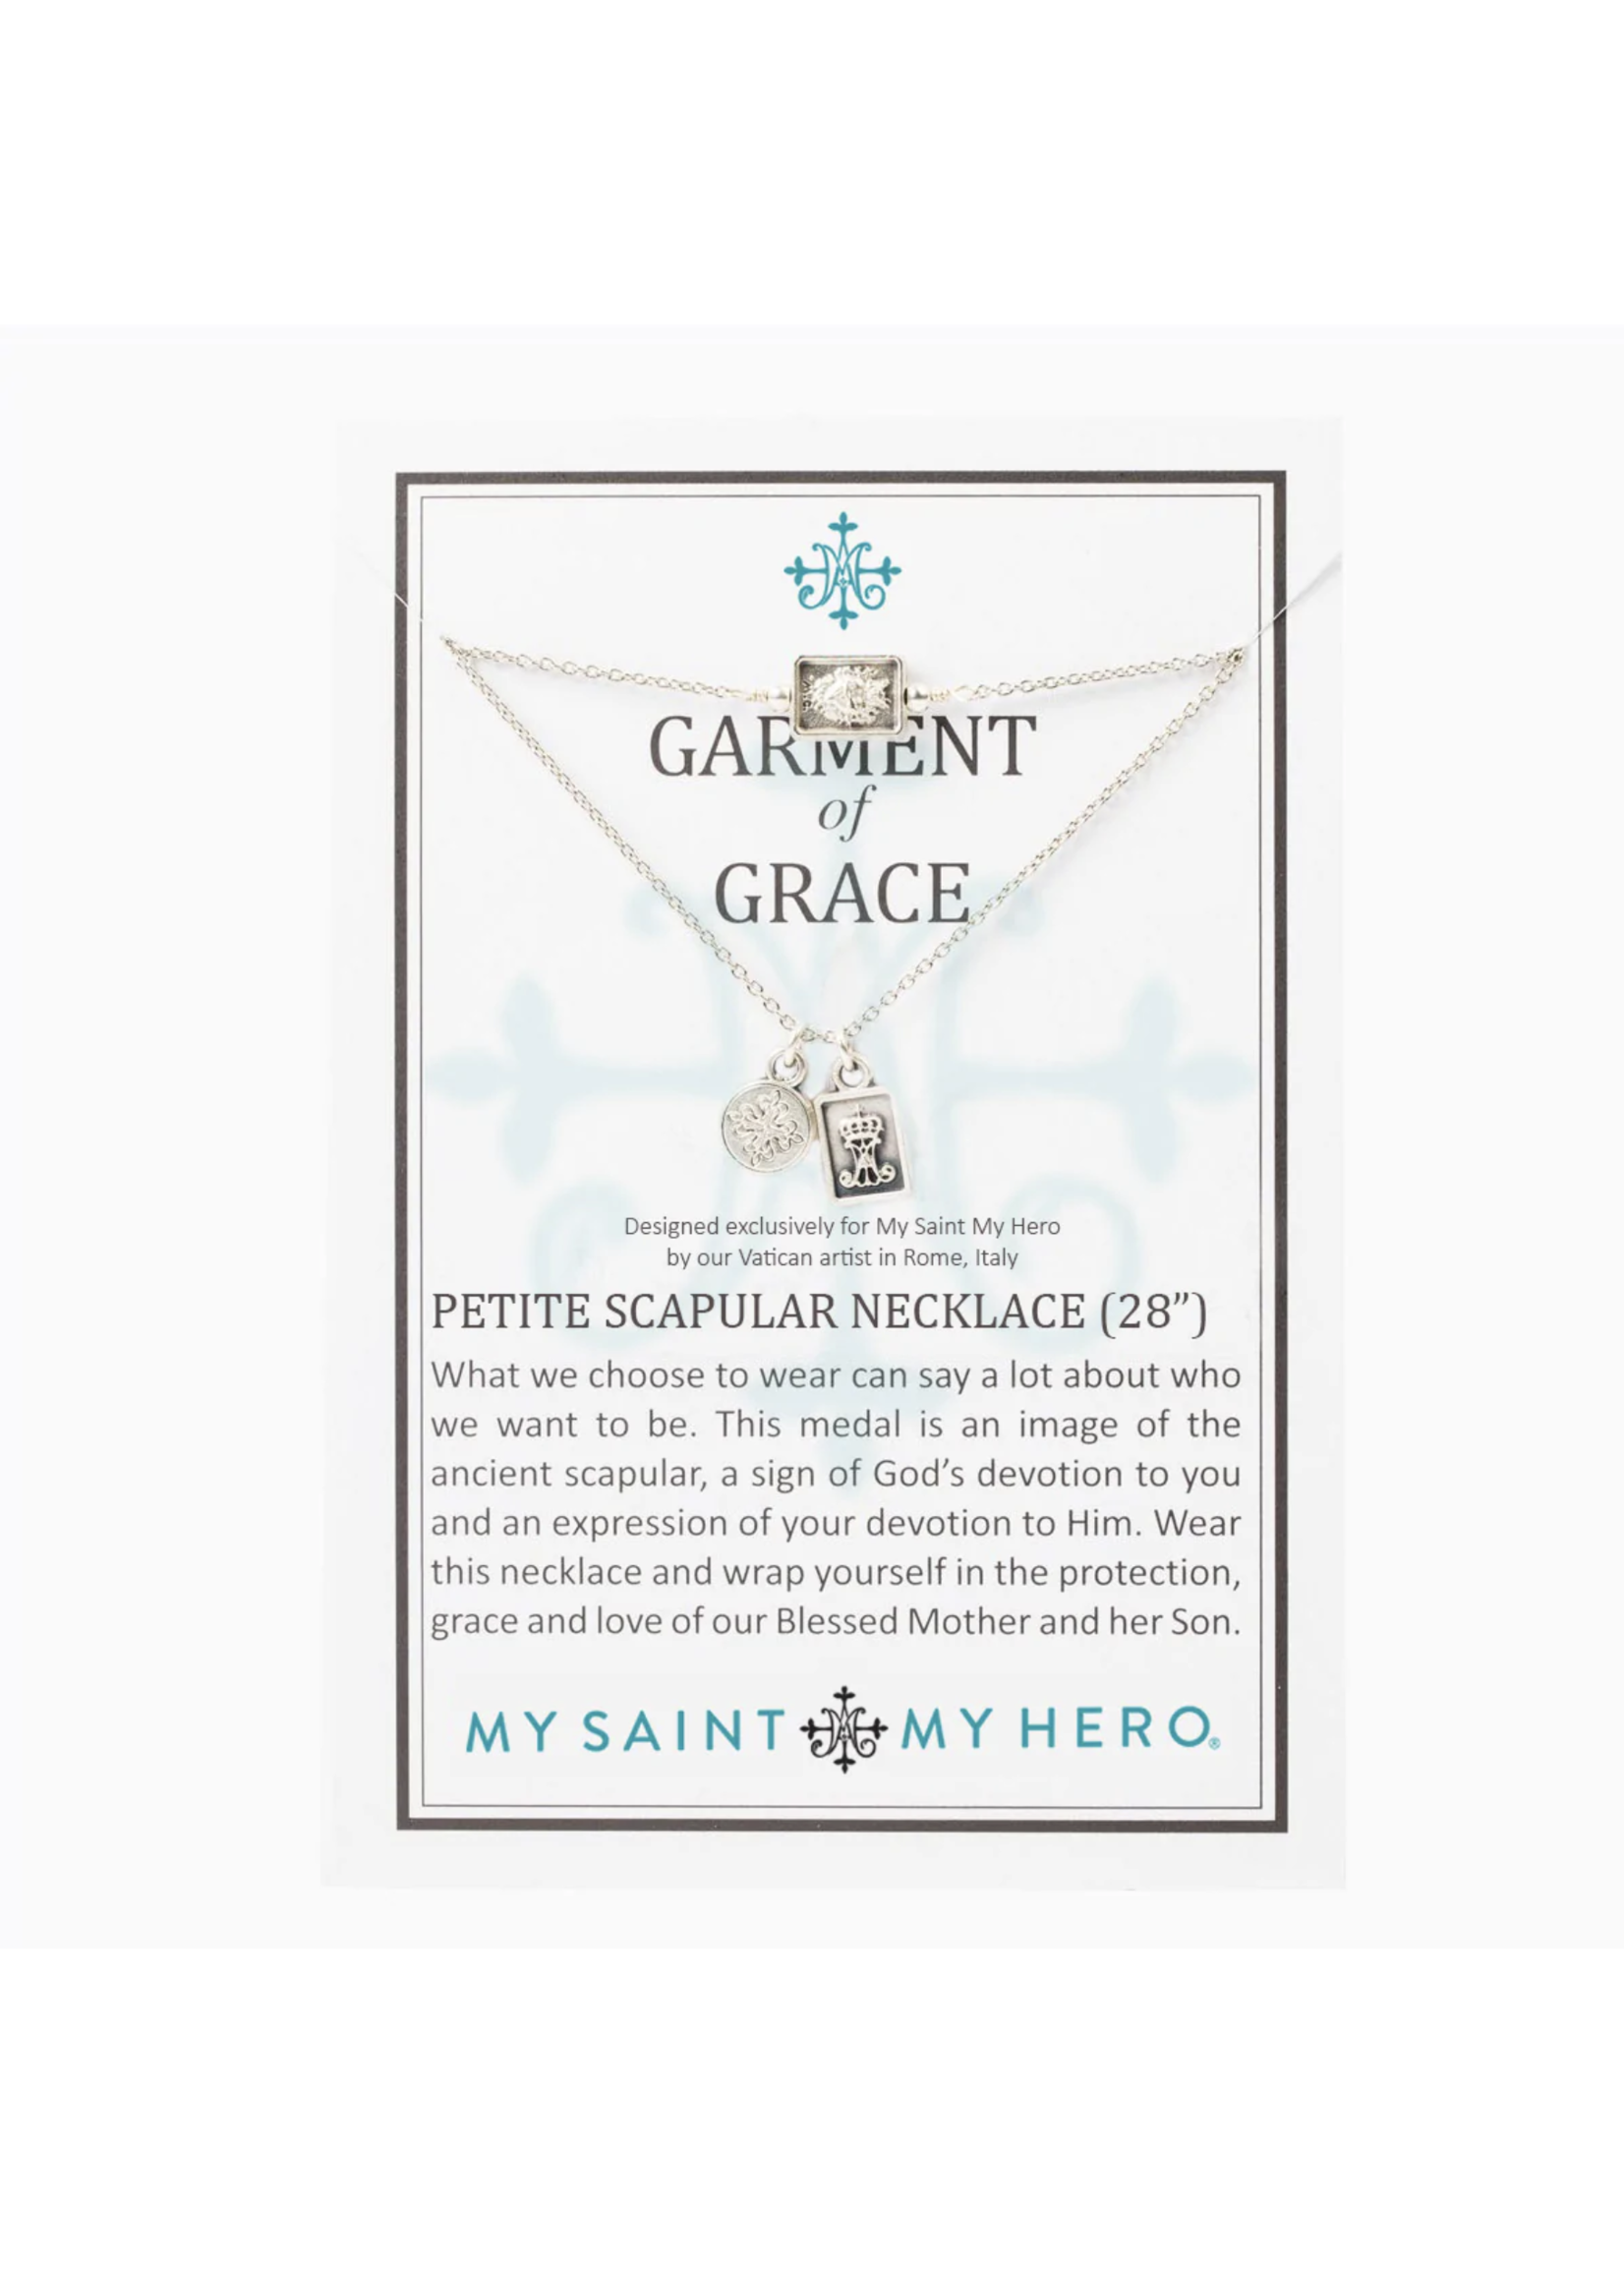 My Saint My Hero Garment of Grace Gold-tone Petite Scapular Necklace